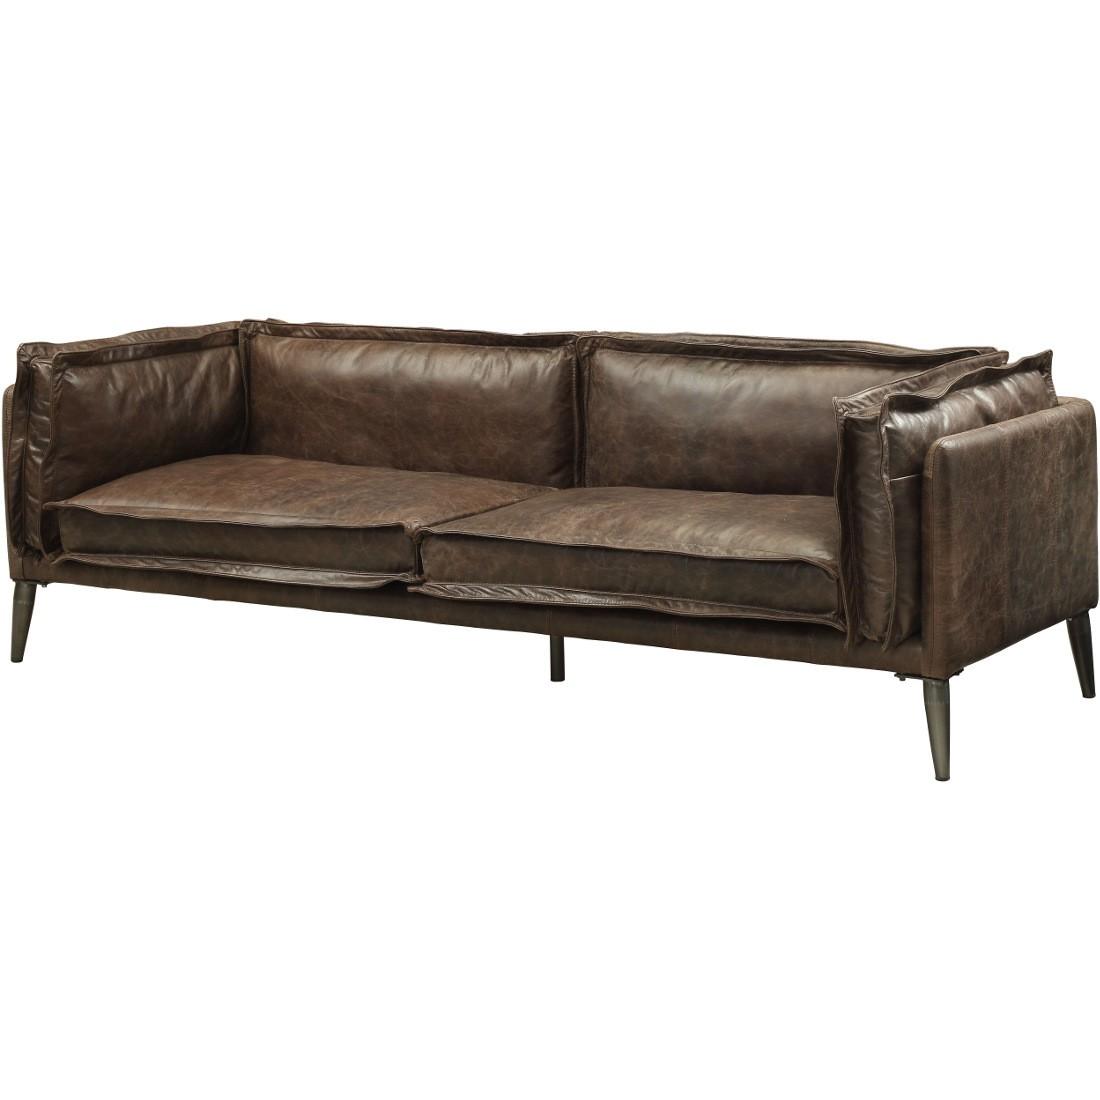 Contemporary Sofa SKU: W002025902 SKU: W002025902 in Chocolate, Brown Top grain leather